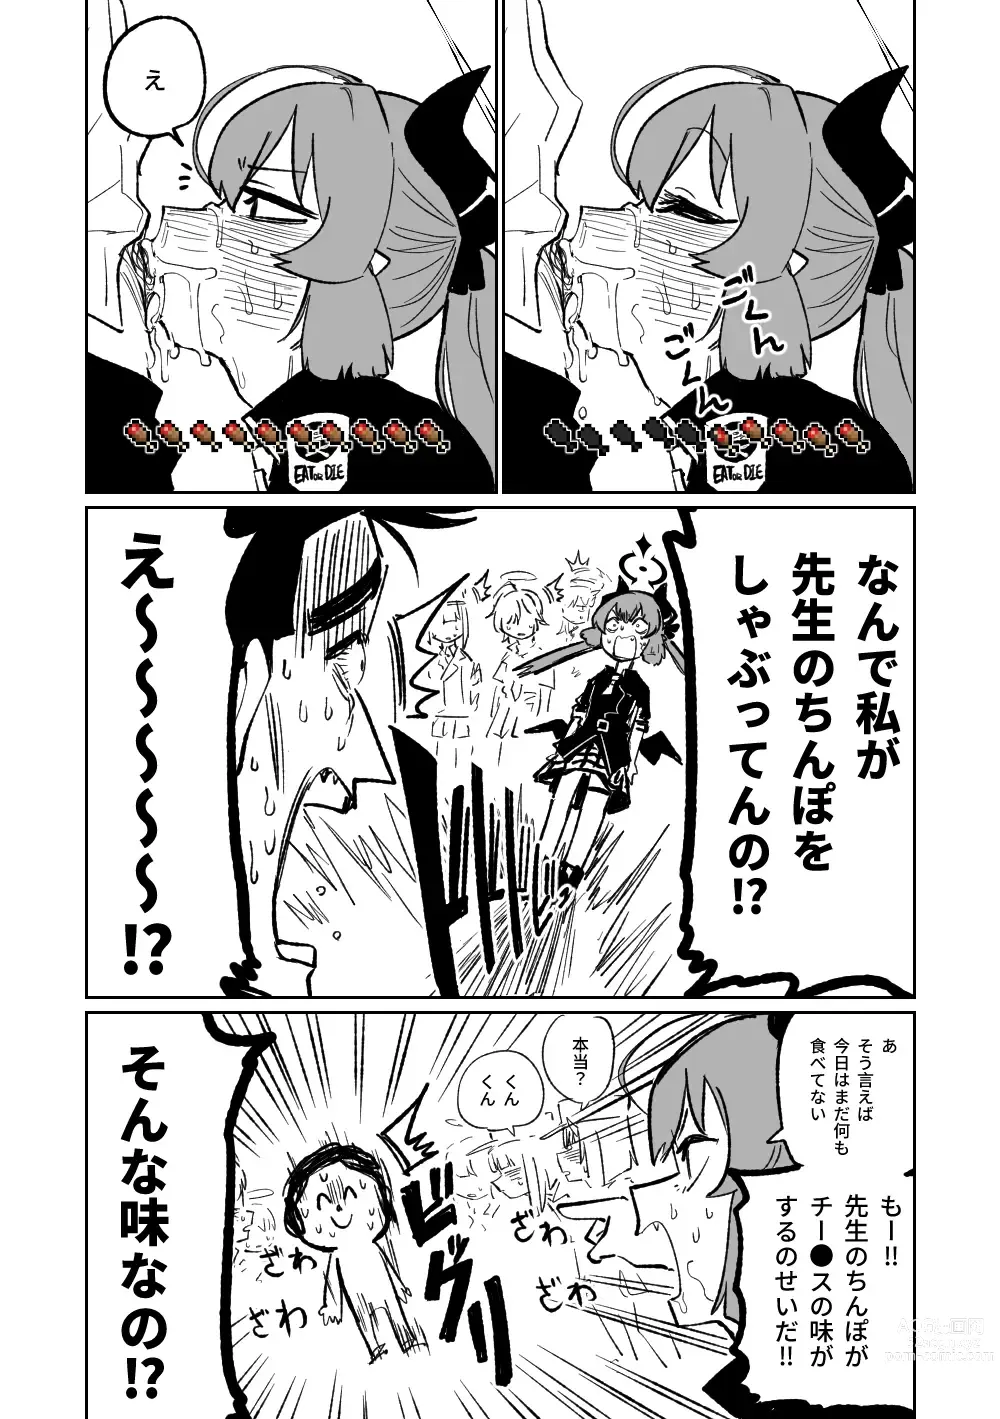 Page 4 of doujinshi Hungry Junko